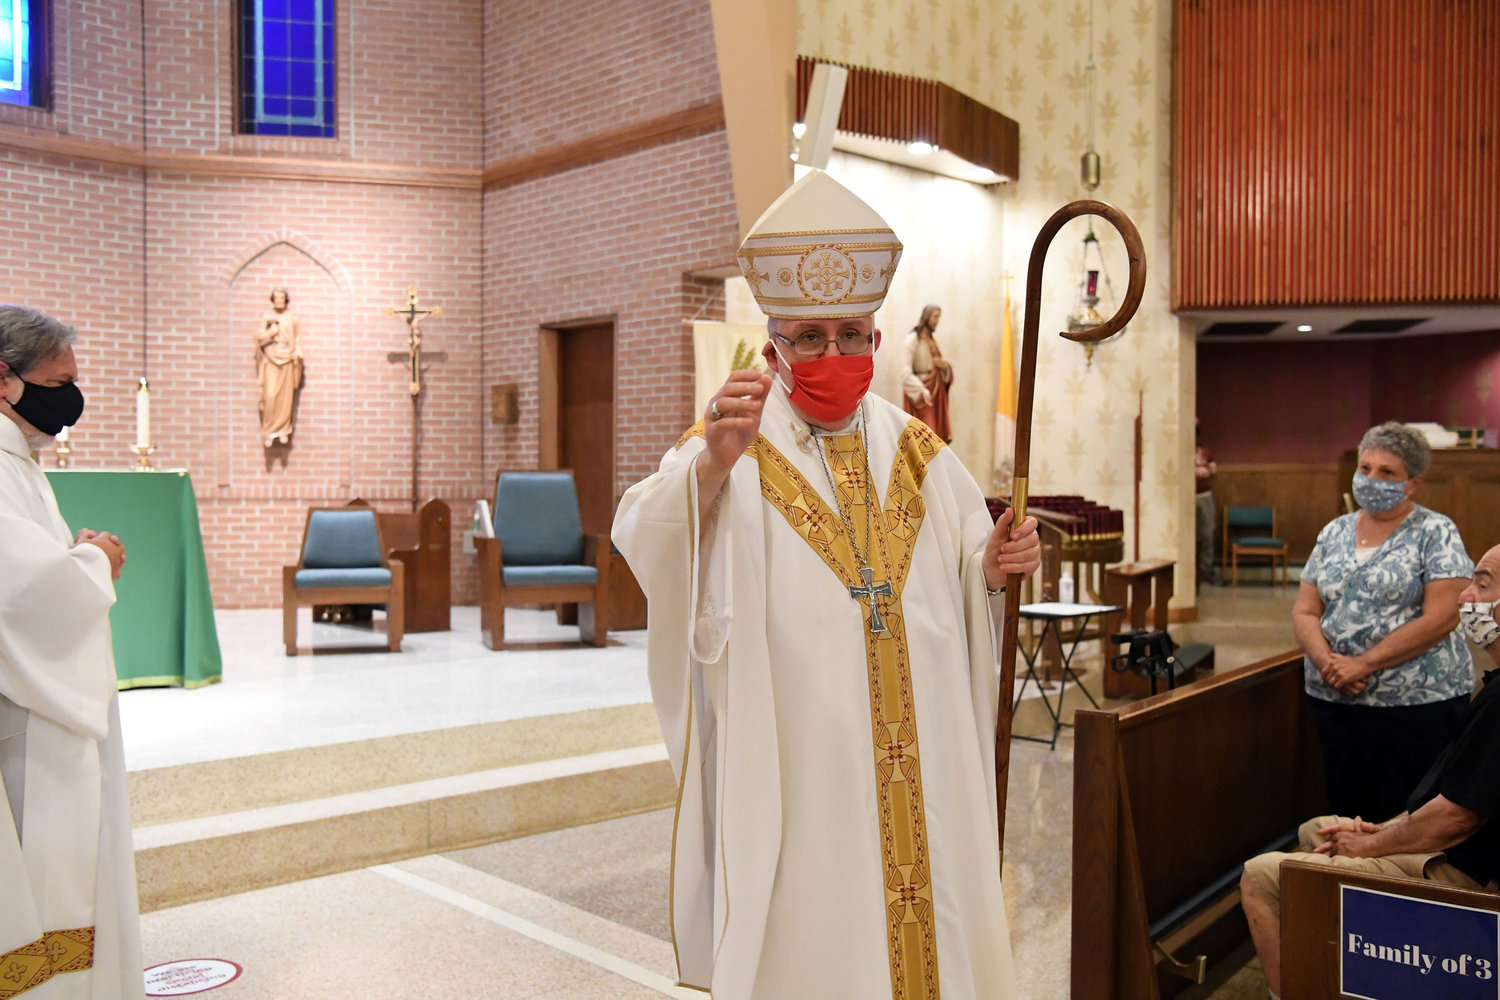 Bishop O’Hara gives a blessing at the end of Mass.